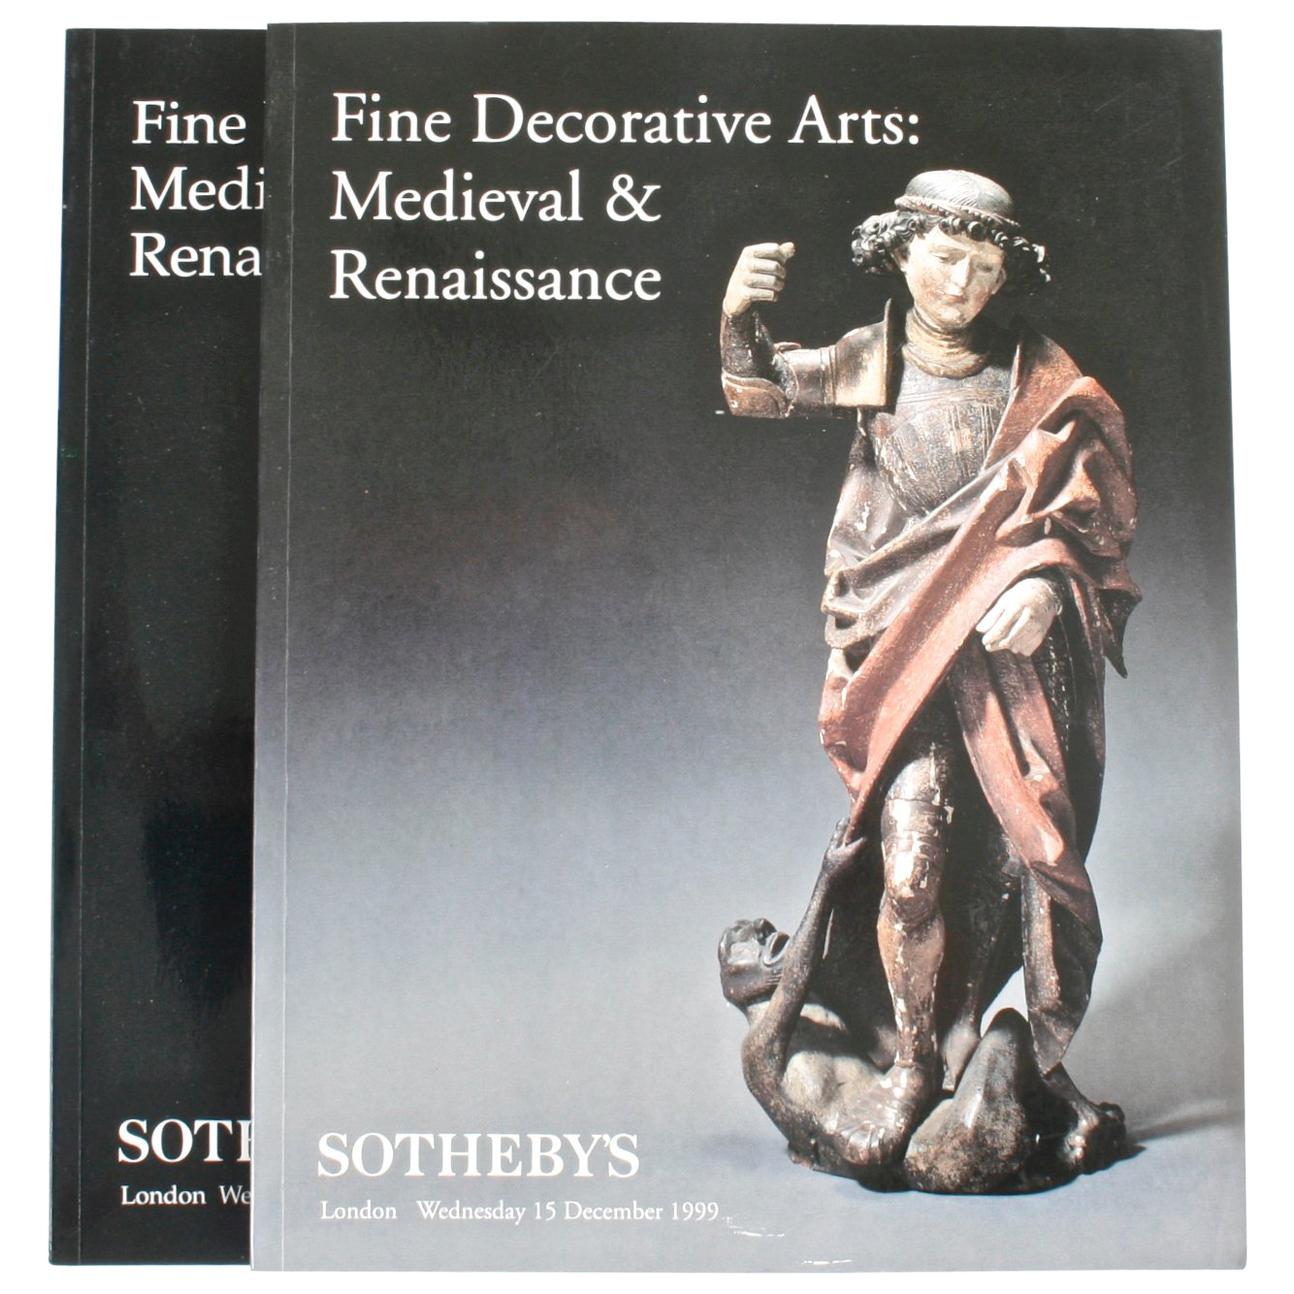 Pair of Sotheby's Catalogues on Fine Decorative Arts: Medieval & Renaissance